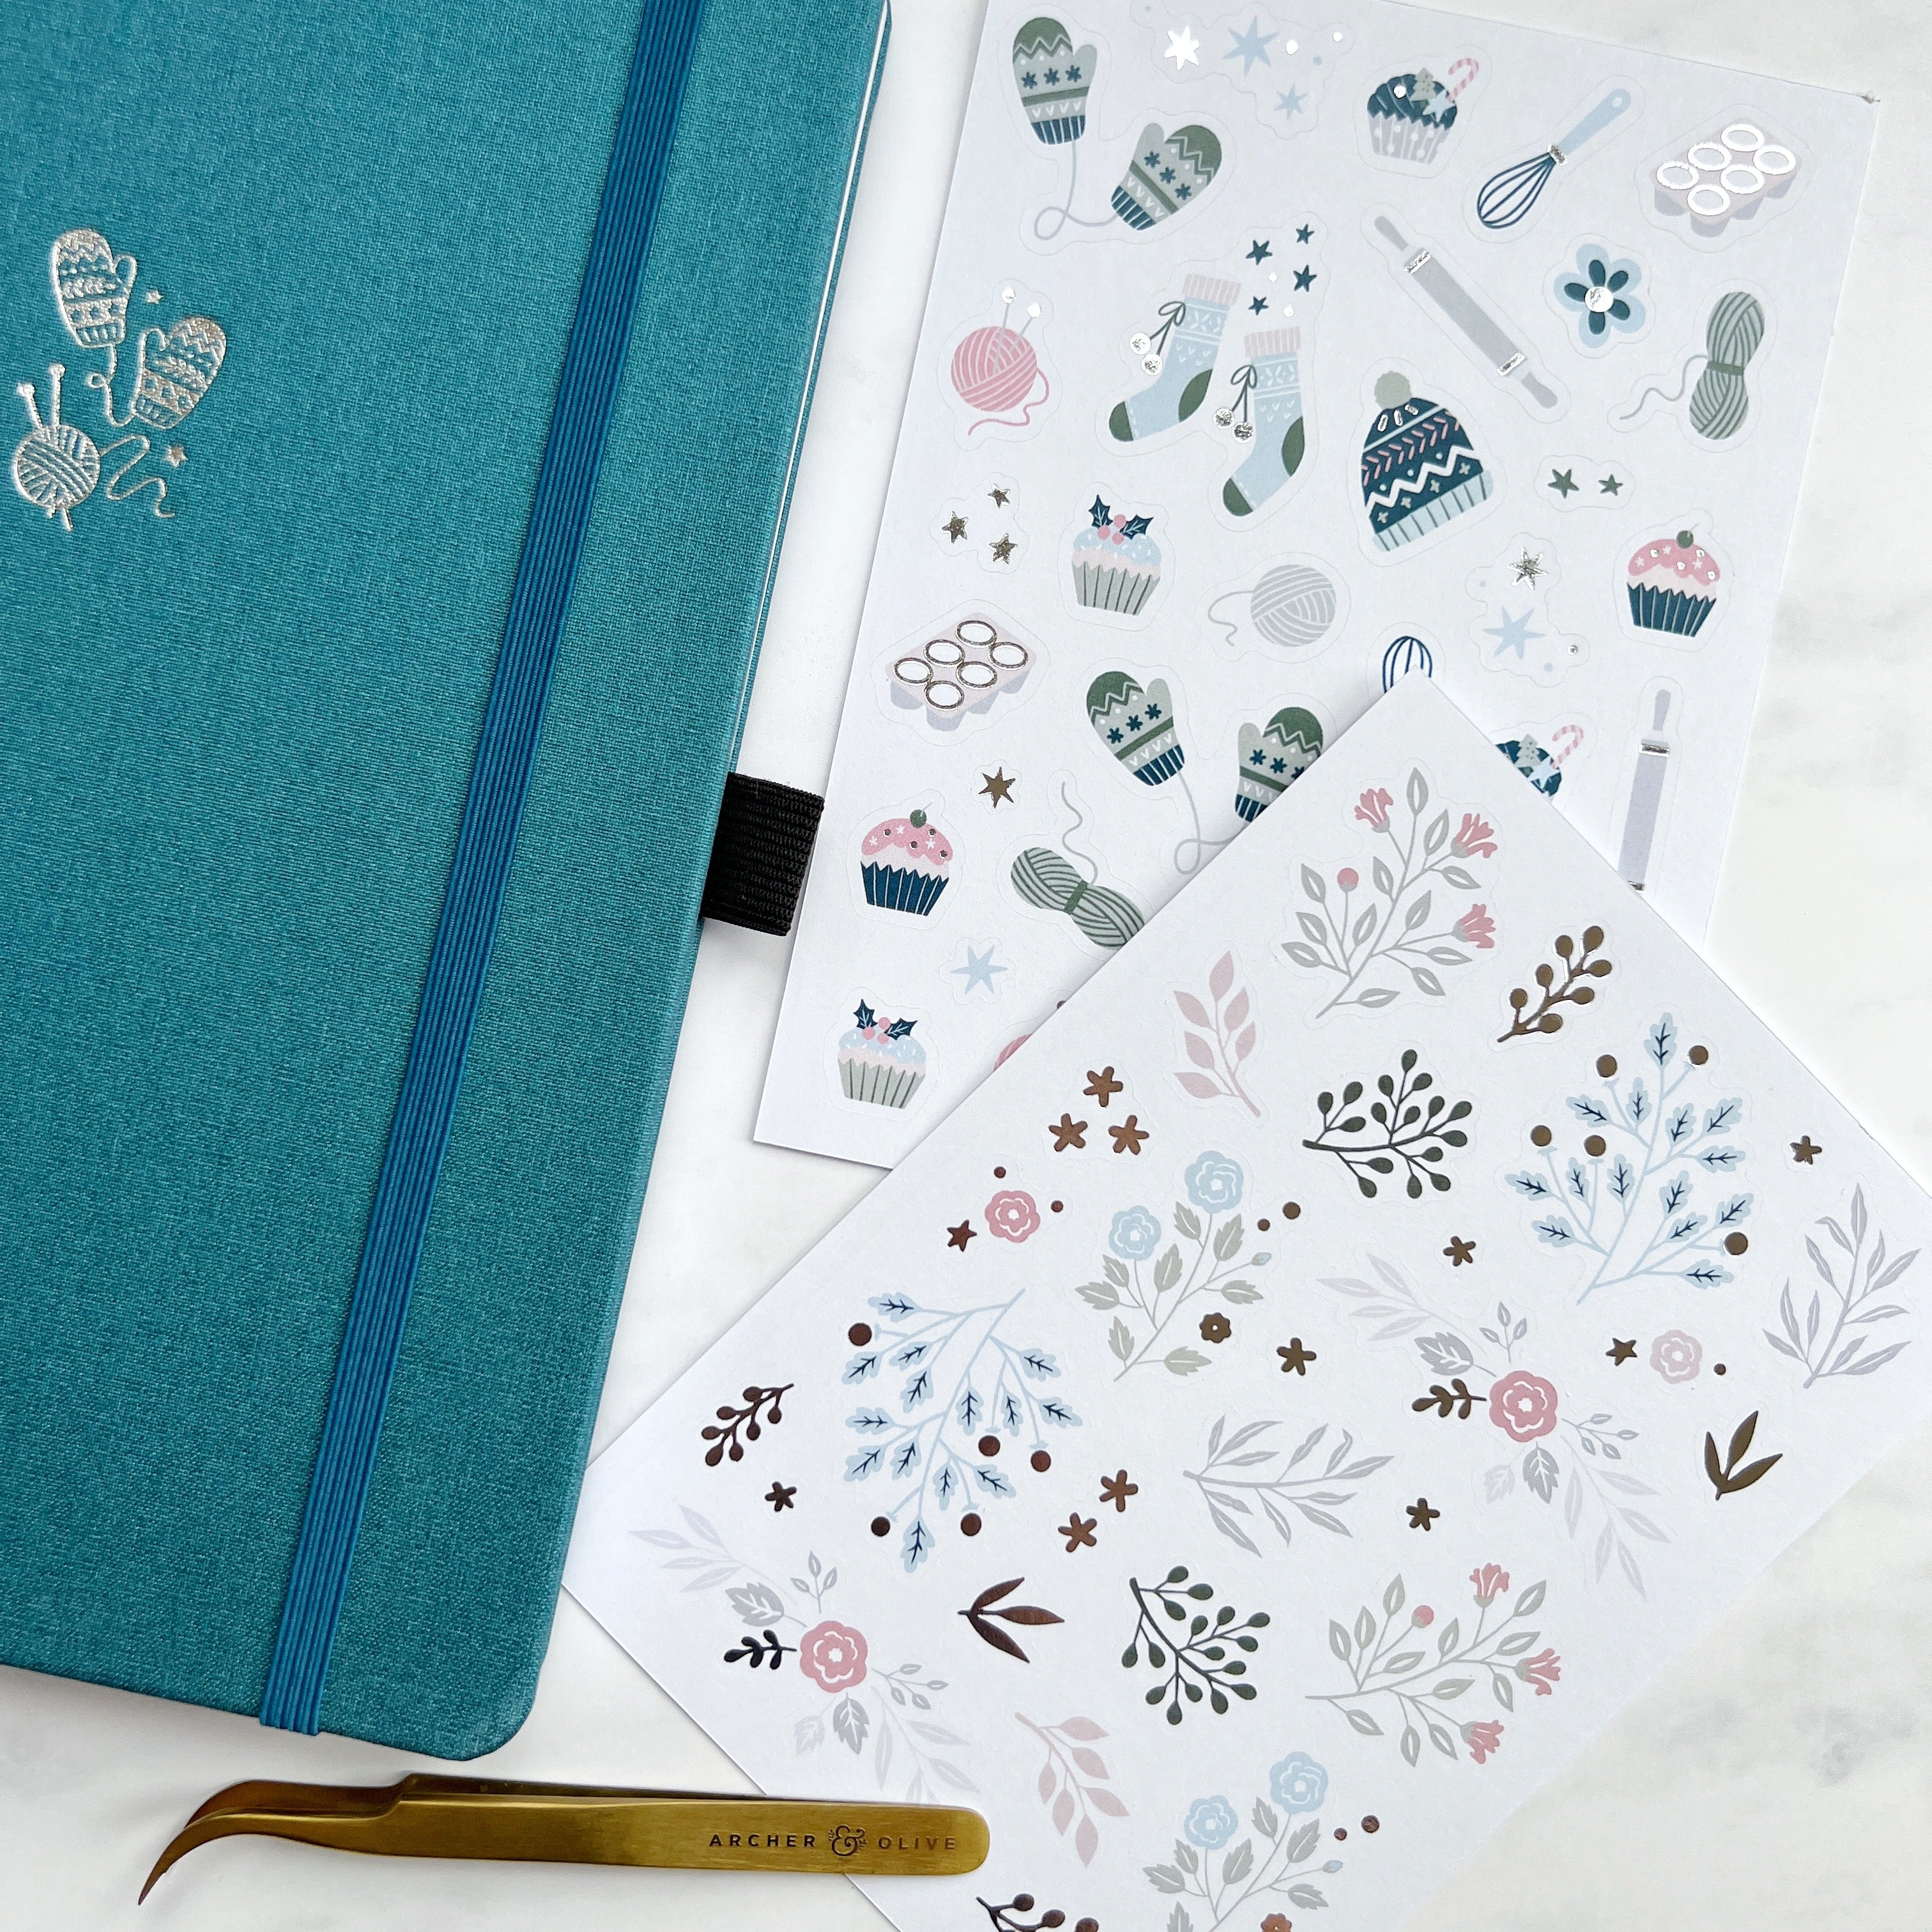 Winter themed stickers alongside teal journal